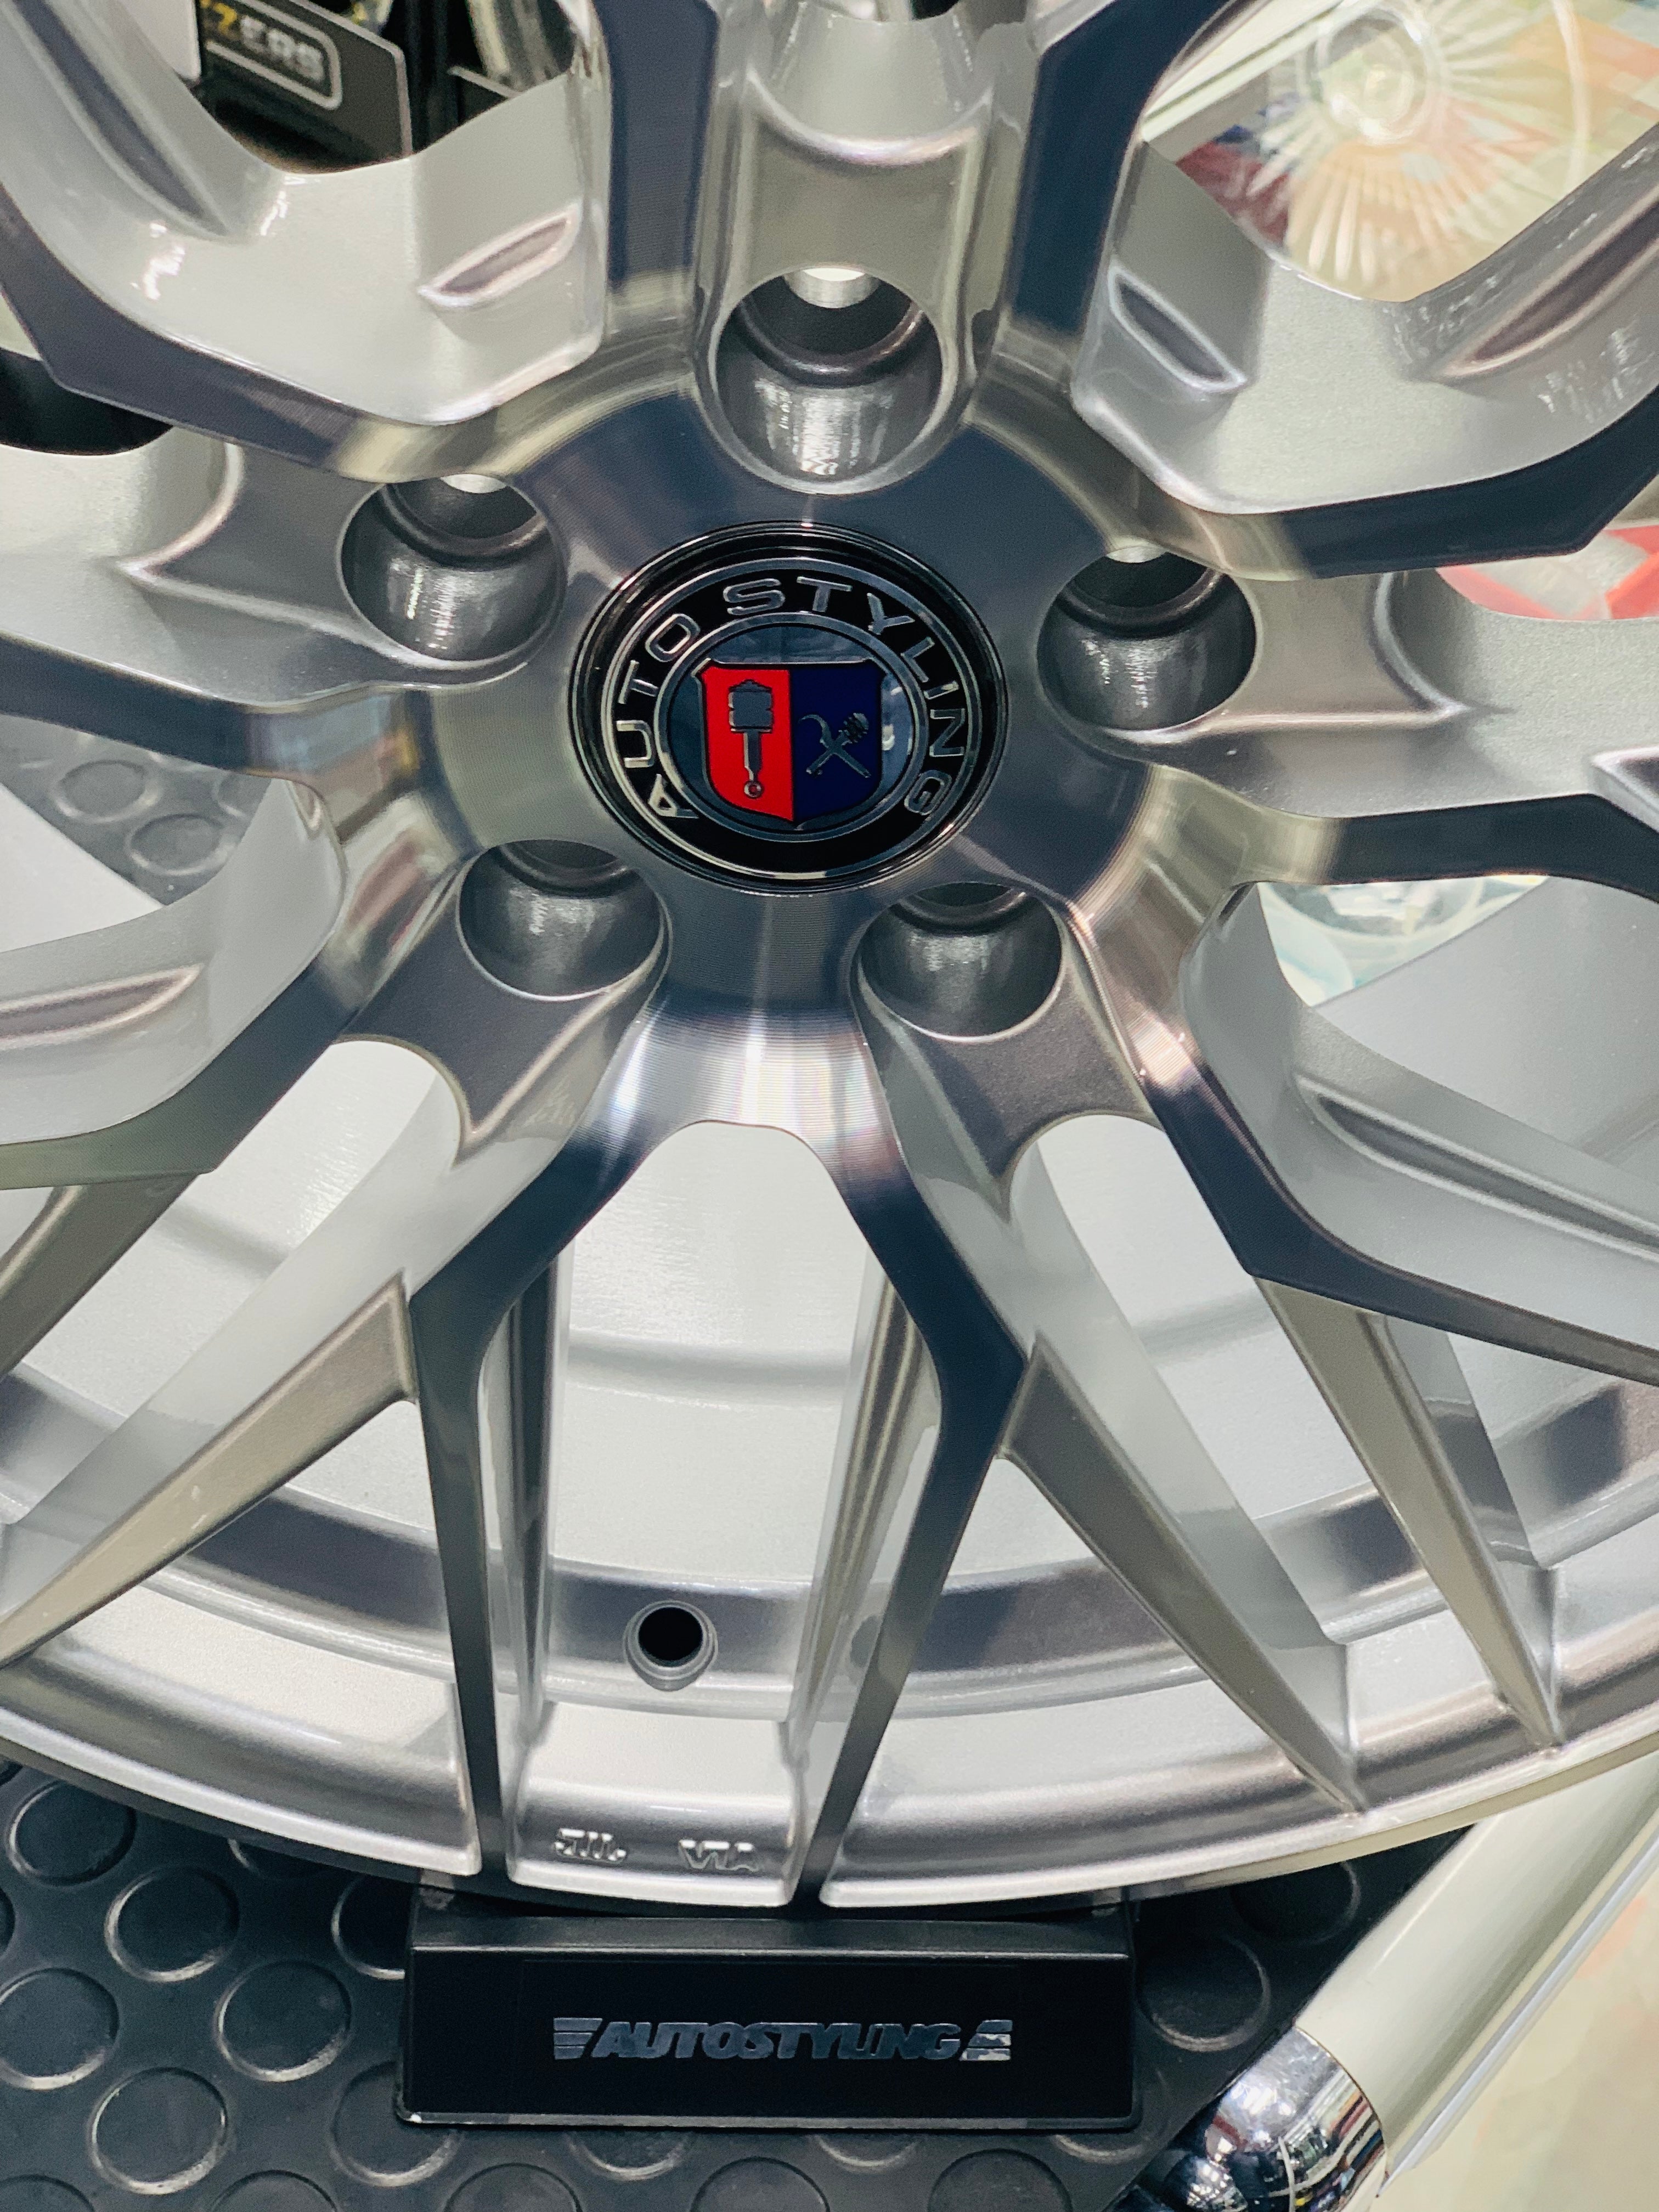 17” GT-30 5x100 pcd wheels